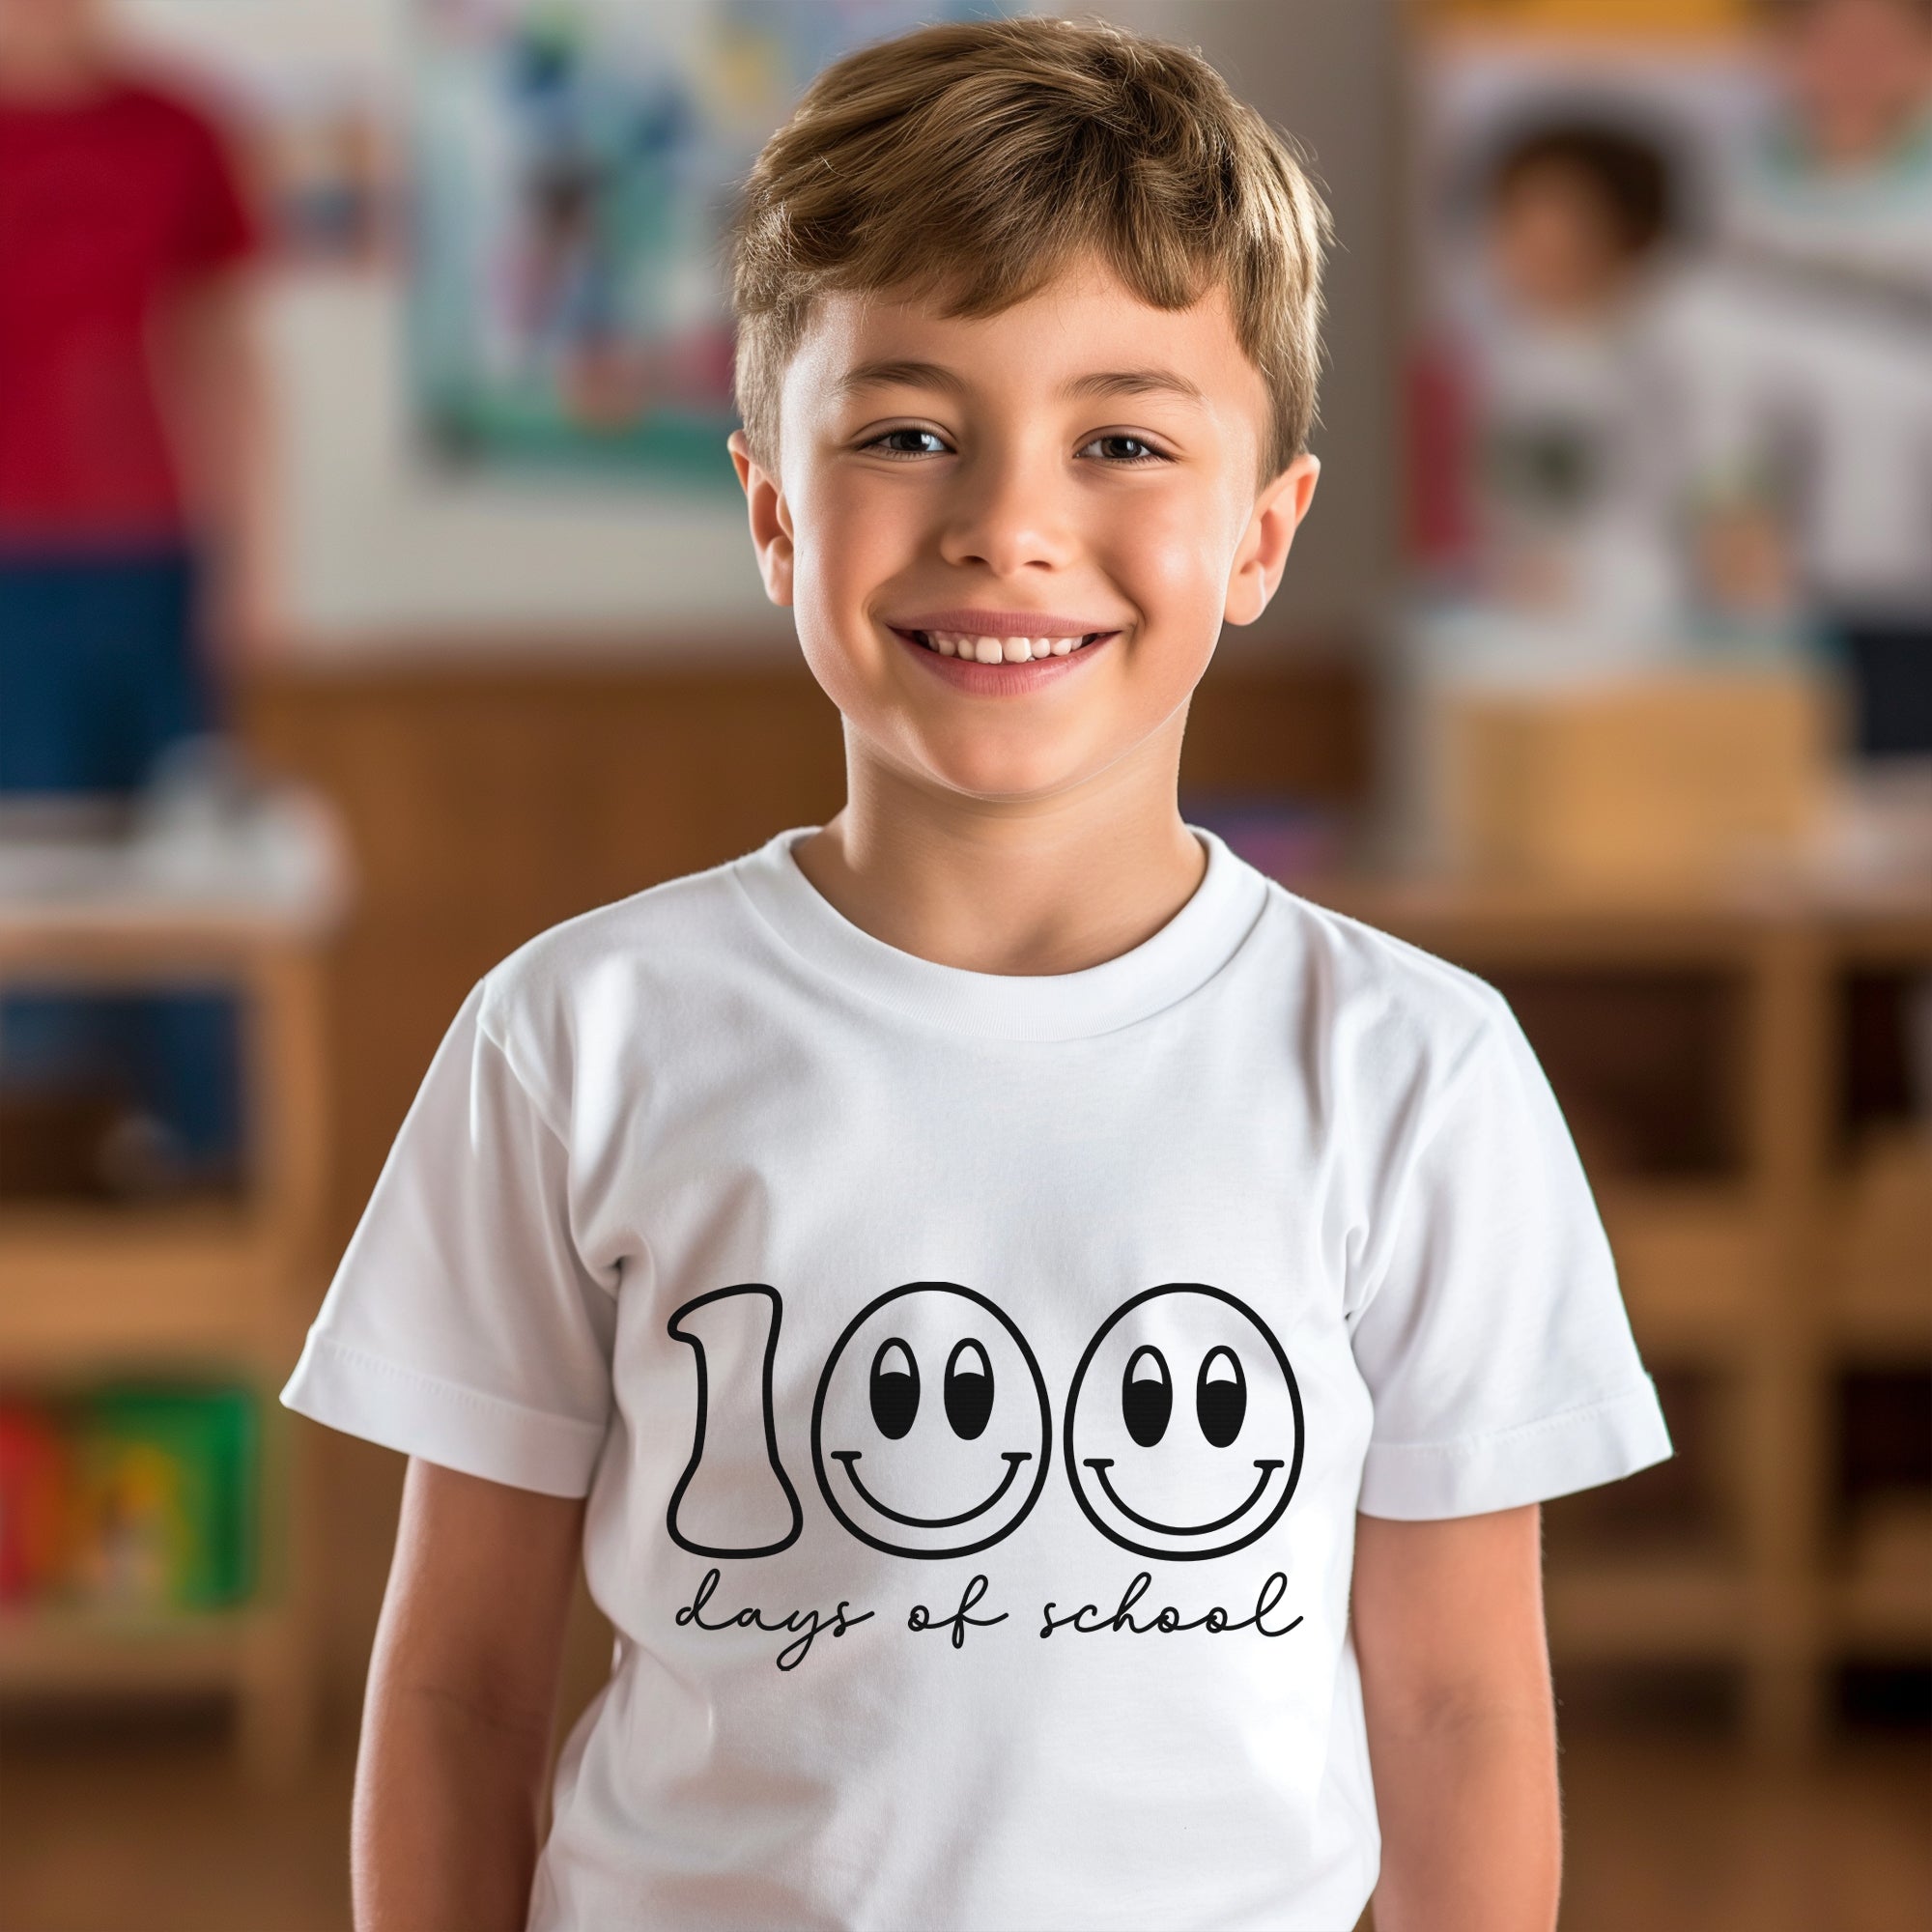 100 Days of School Kids T-Shirt 1165